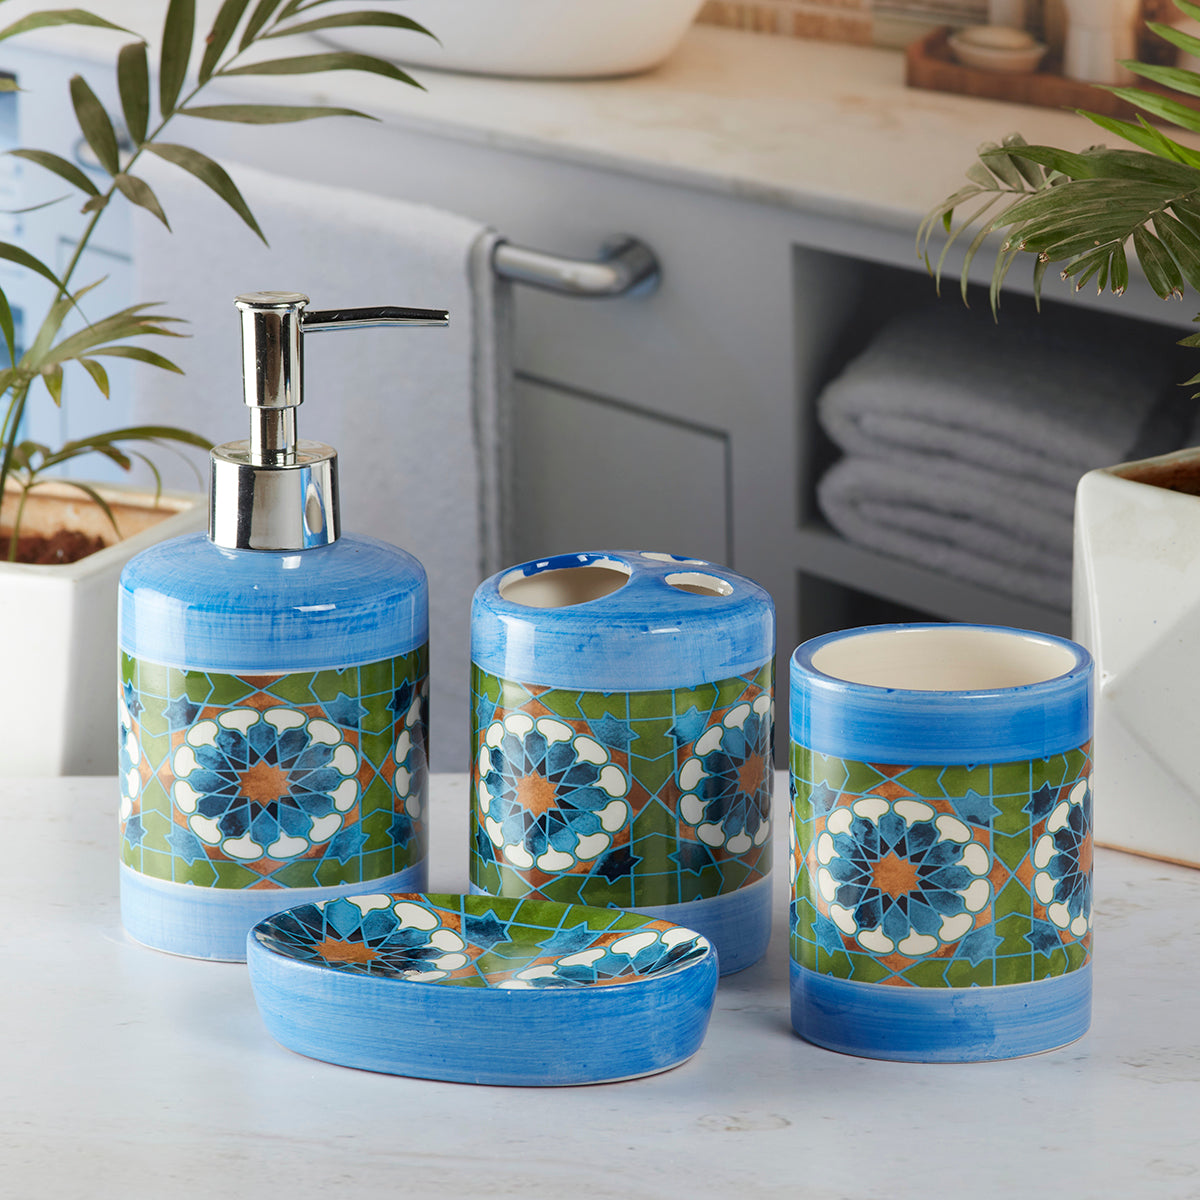 Ceramic Bathroom Accessories Set of 4 Bath Set with Soap Dispenser (8476)